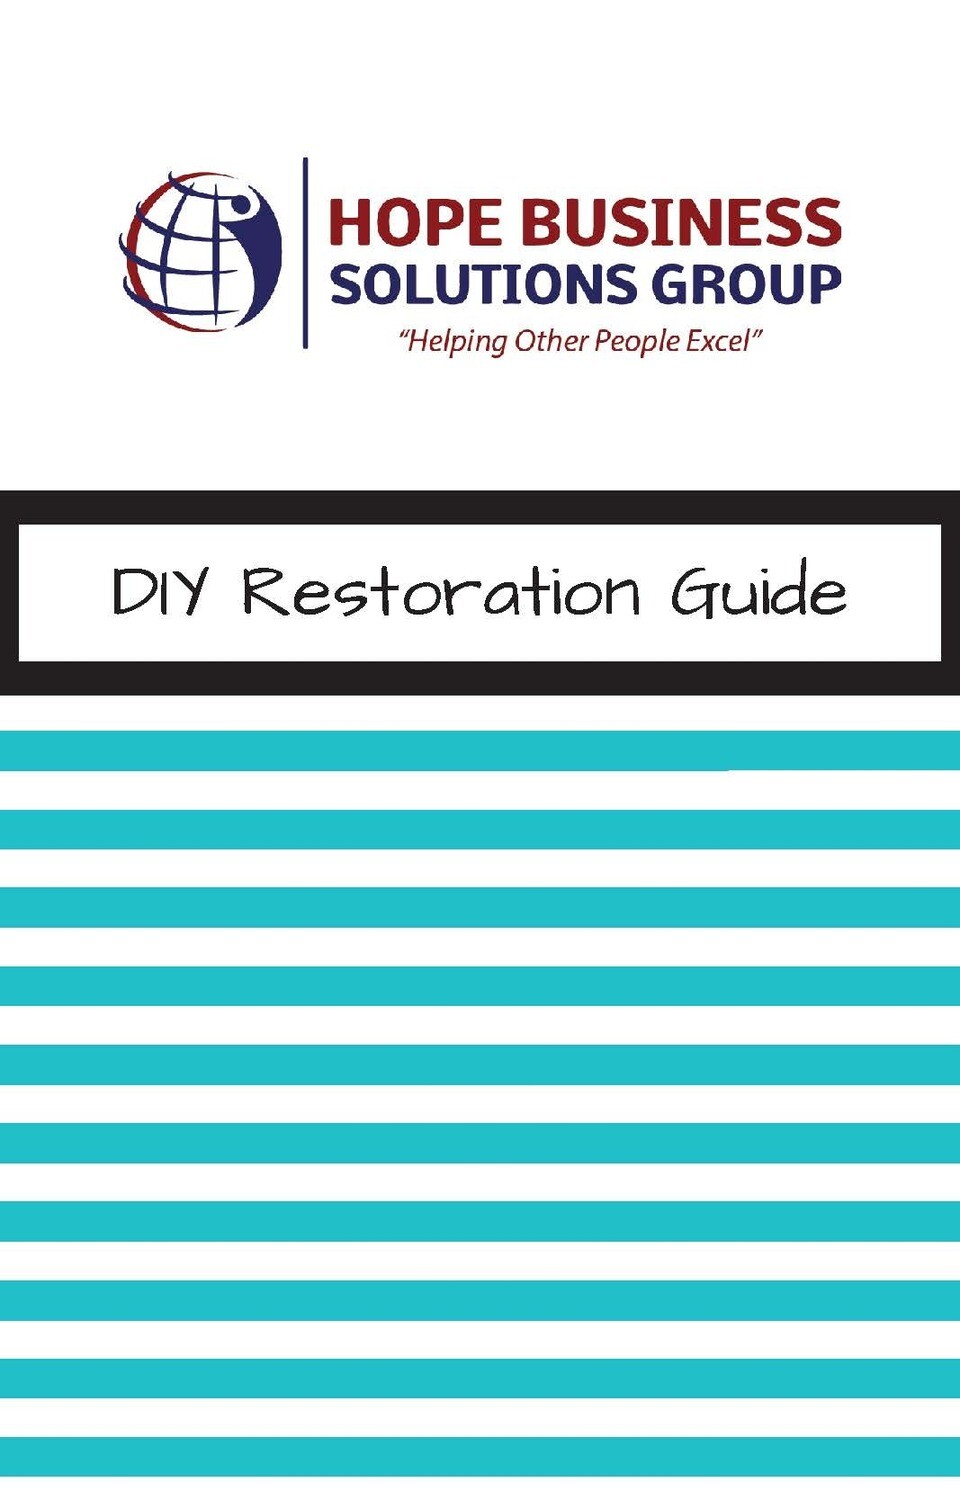 Hope Business Solutions Group: DIY Restoration Guide